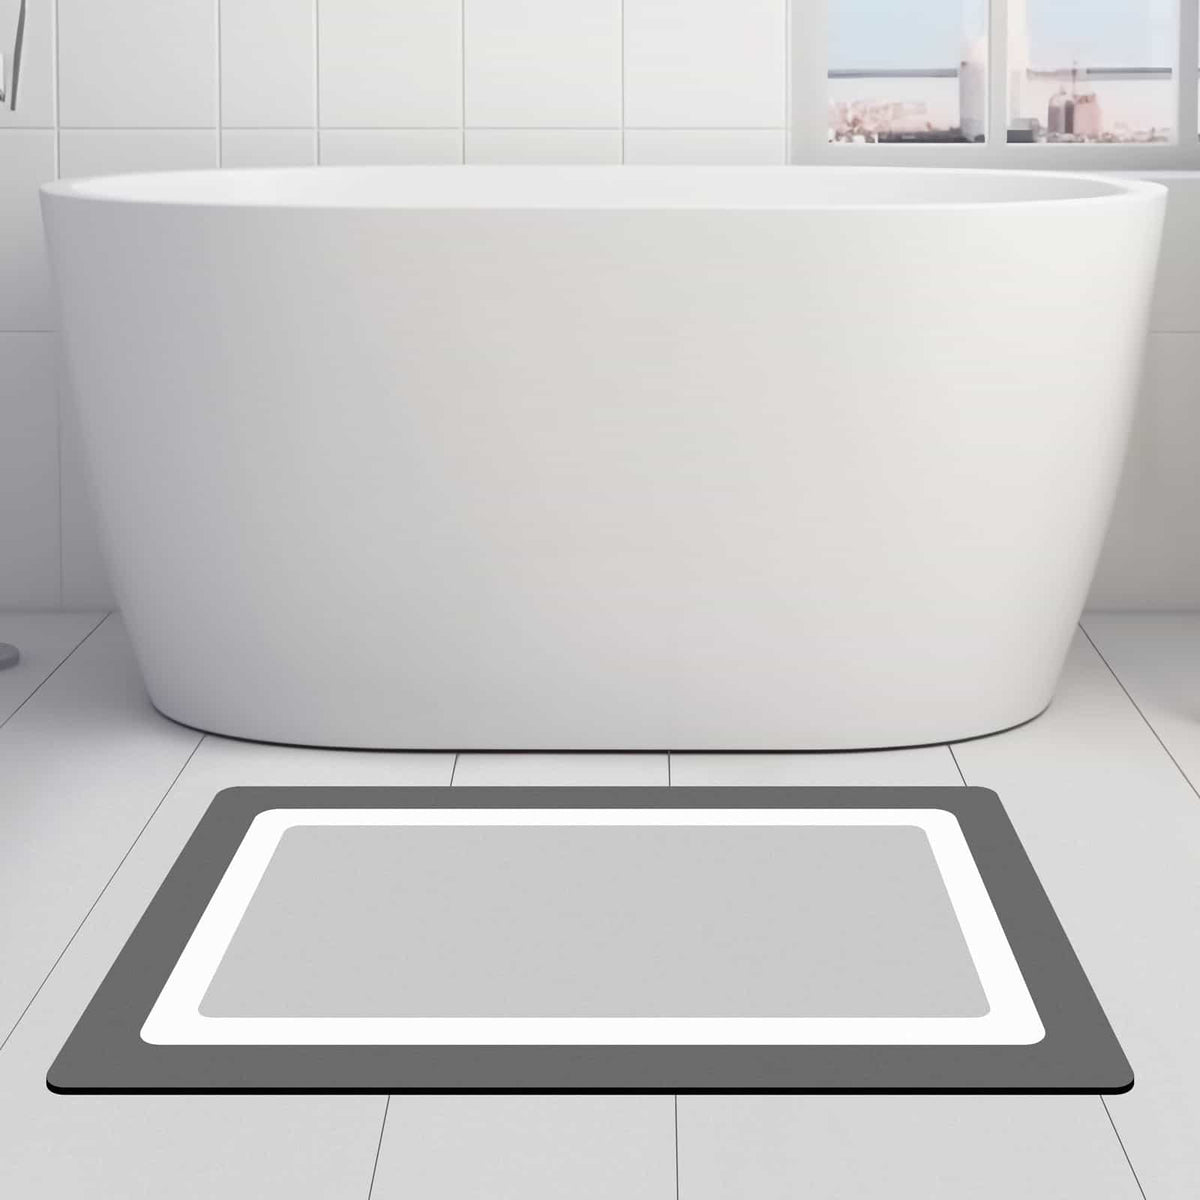 Matace Bathmat, Machine Washable Diatomaceous Earth Bath Mat —